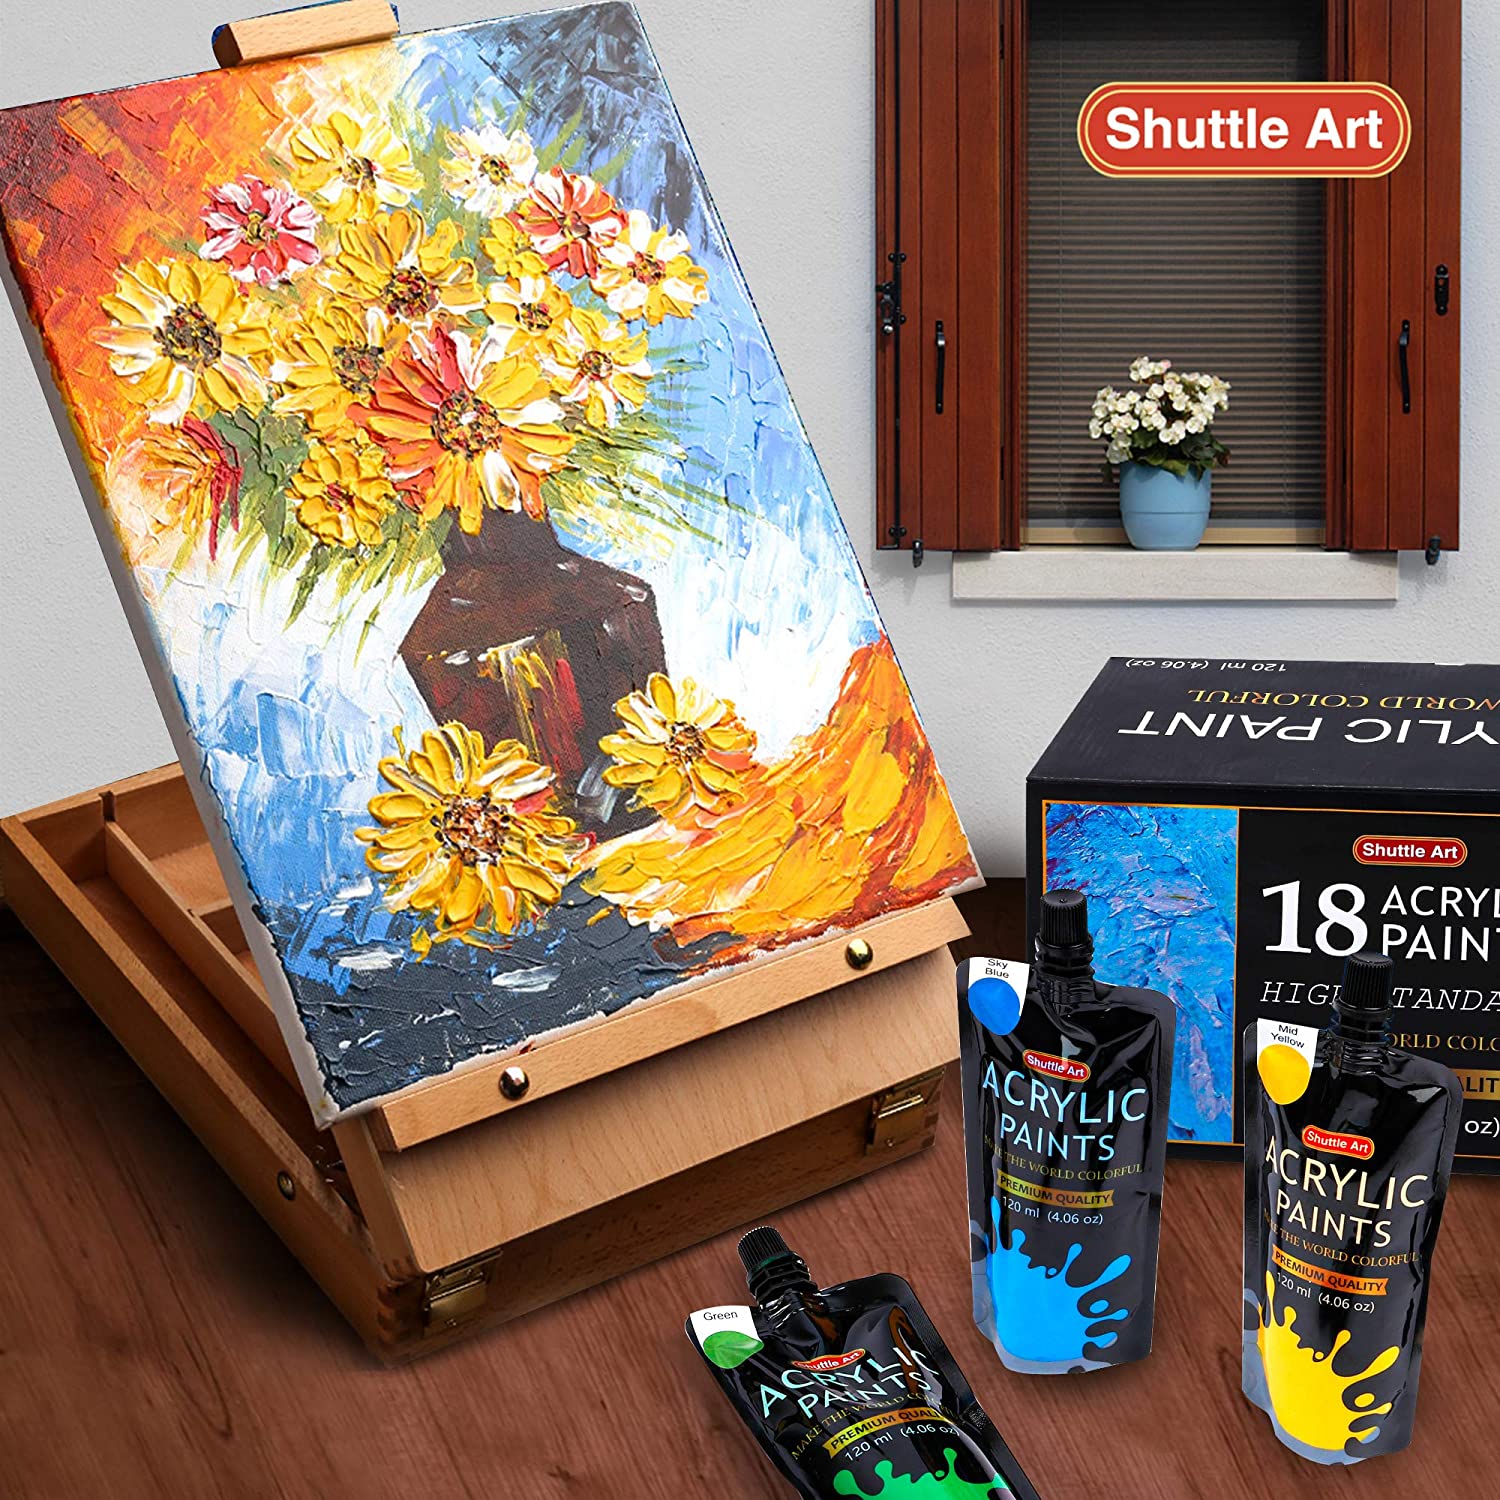 Shuttle Art Juego de pintura acrílica, tubos de 15 x 0.4 fl oz, calidad de  artista, pigmentos ricos no tóxicos, colores perfectos para niños, adultos